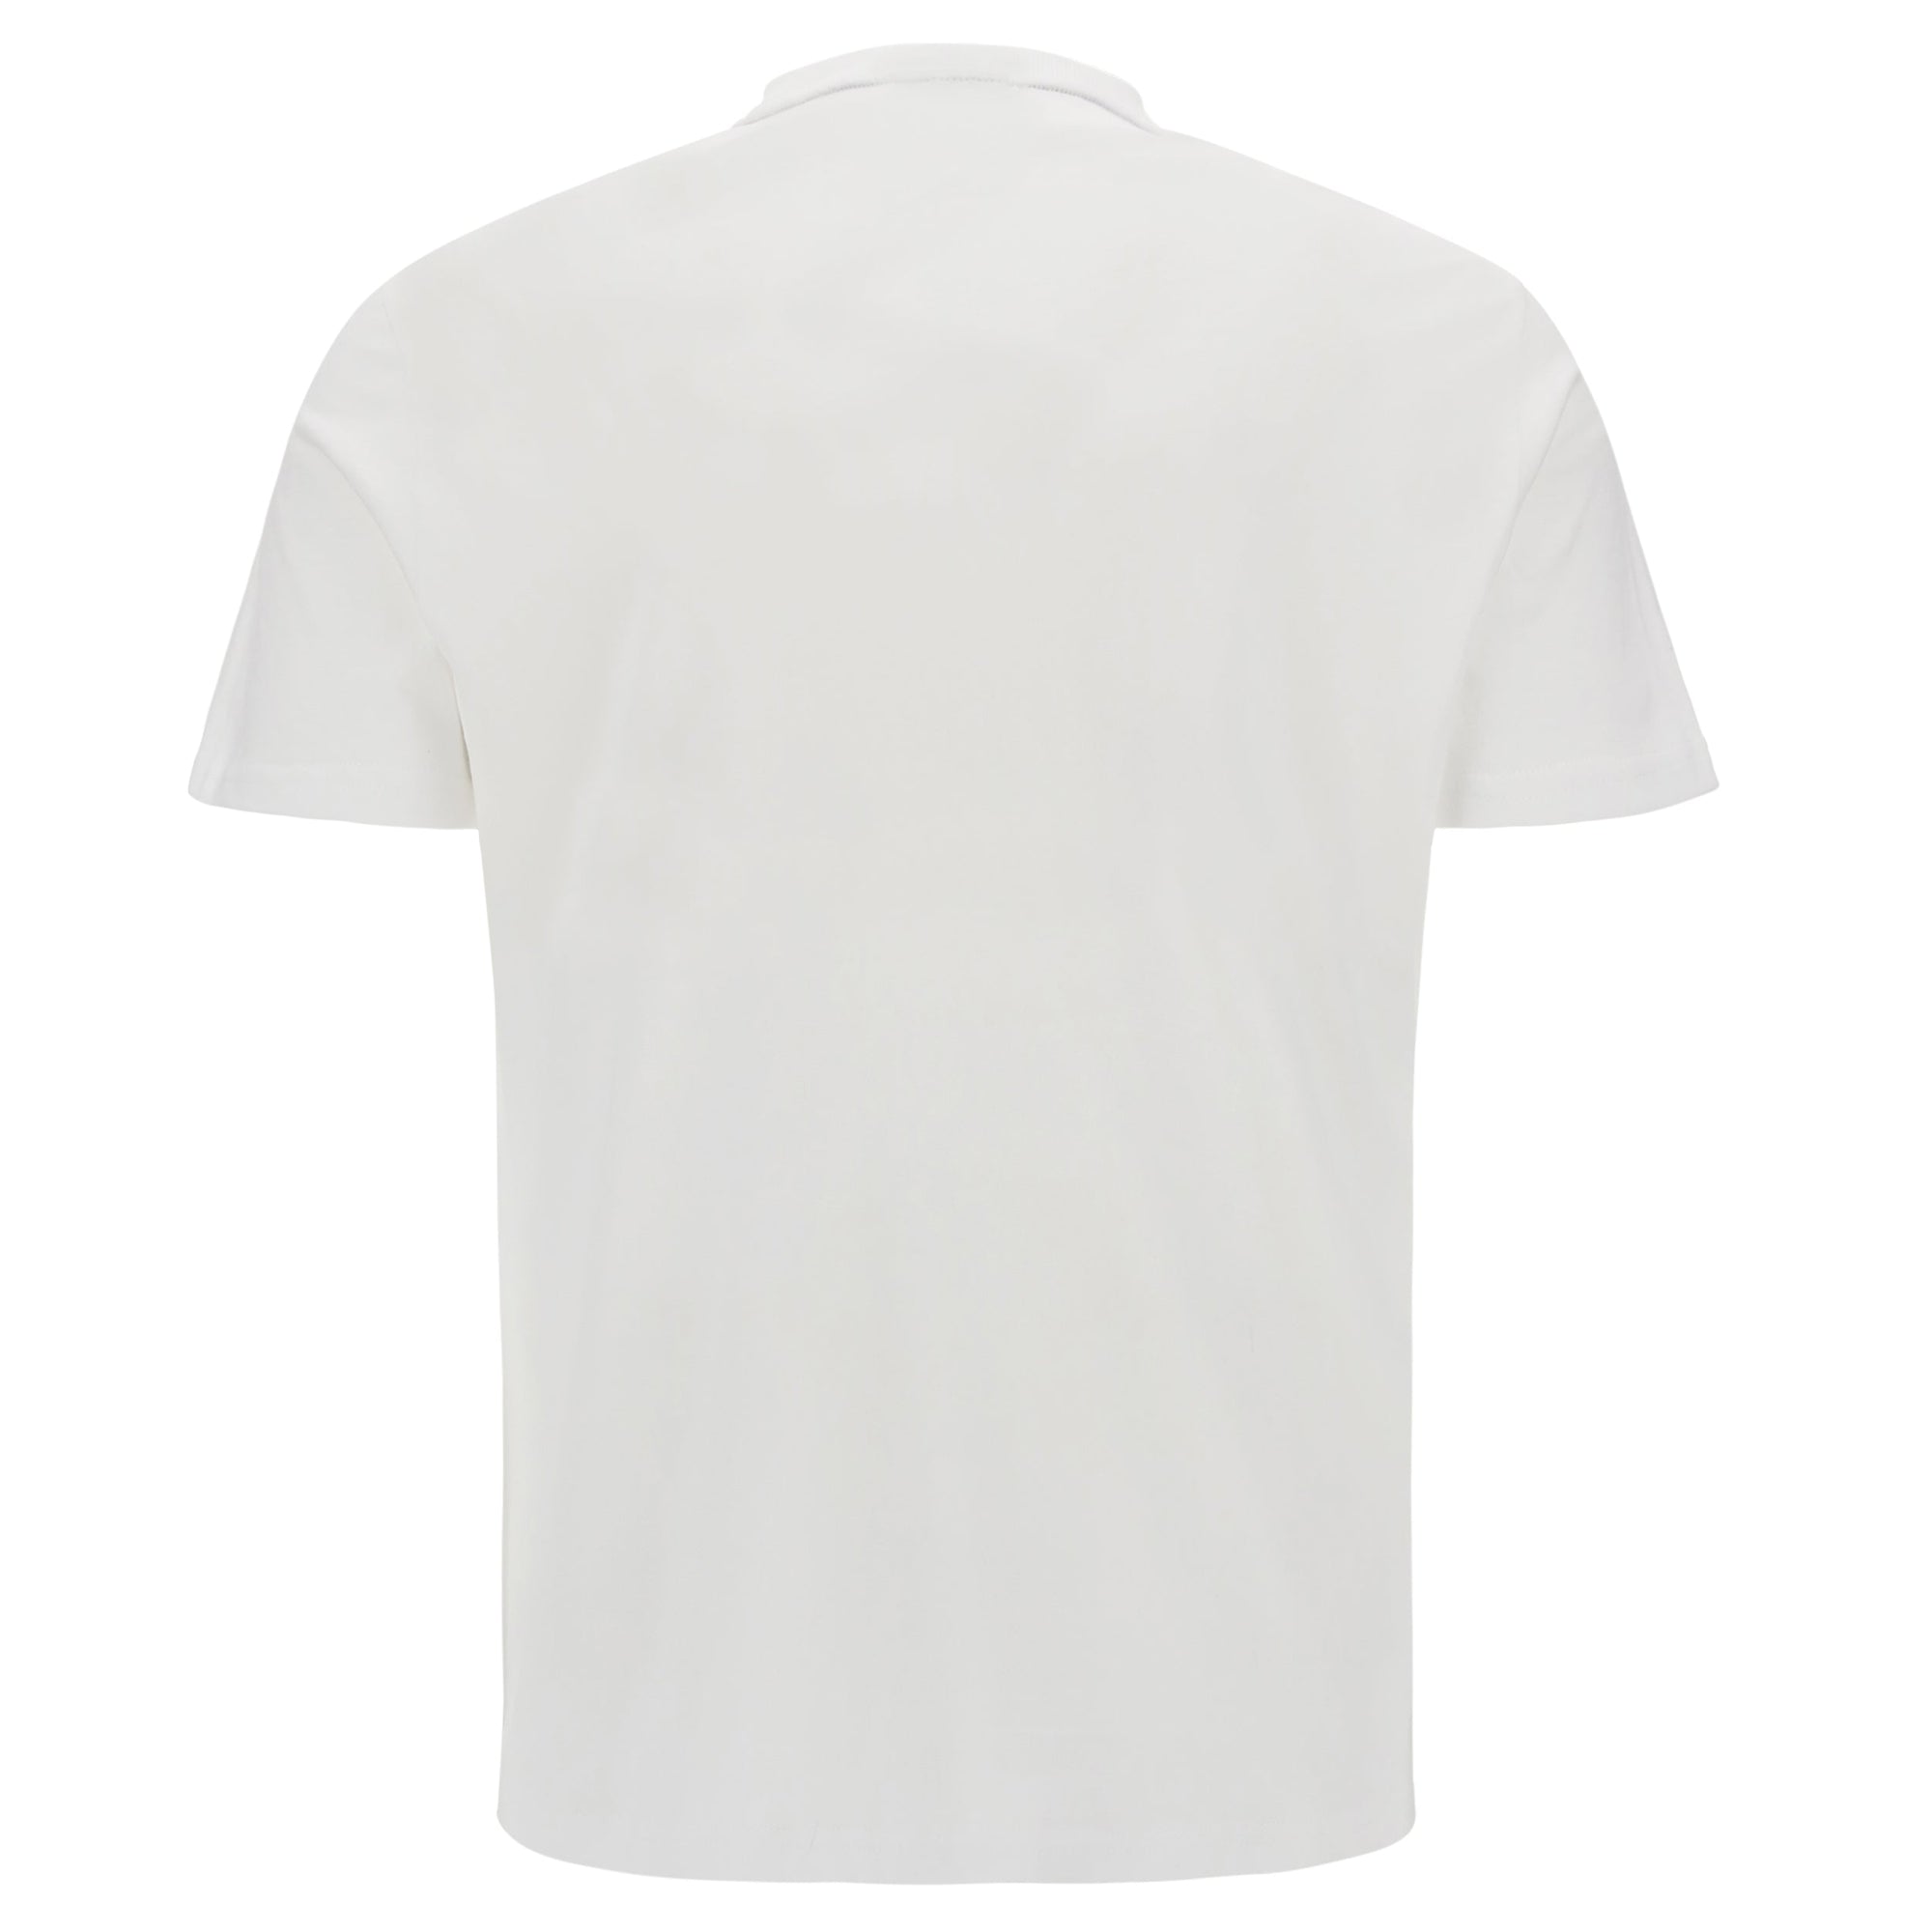 Camiseta de Hombre con Logo Negro - Blanco + Negro 2